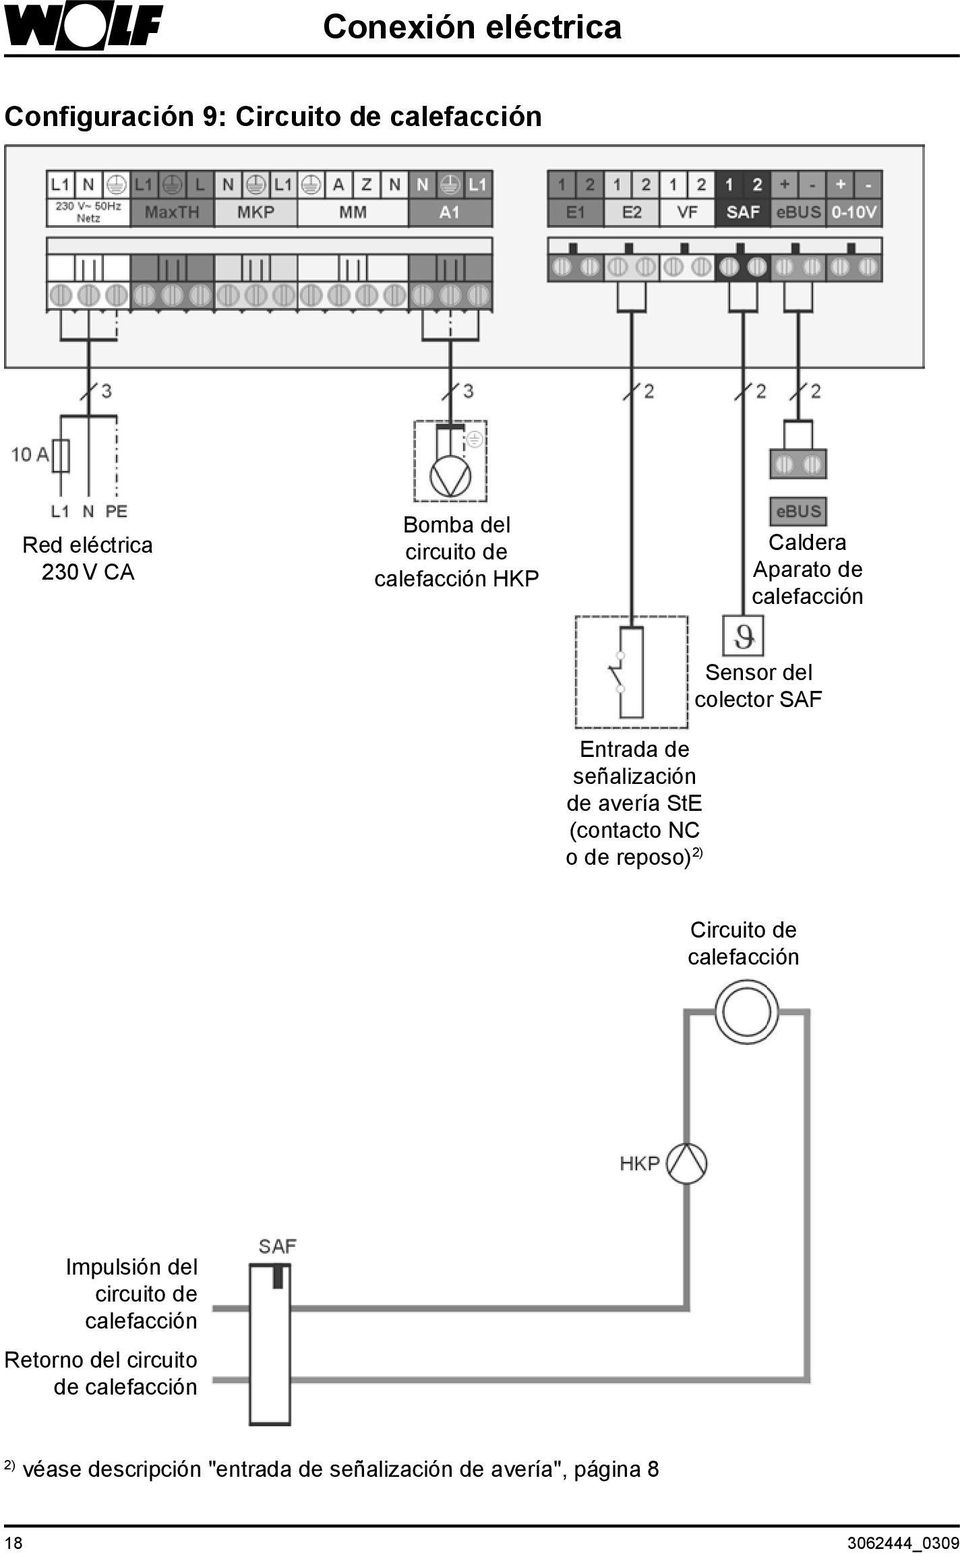 reposo) 2) Sensor del colector SAF Circuito de calefacción Impulsión del circuito de calefacción Retorno